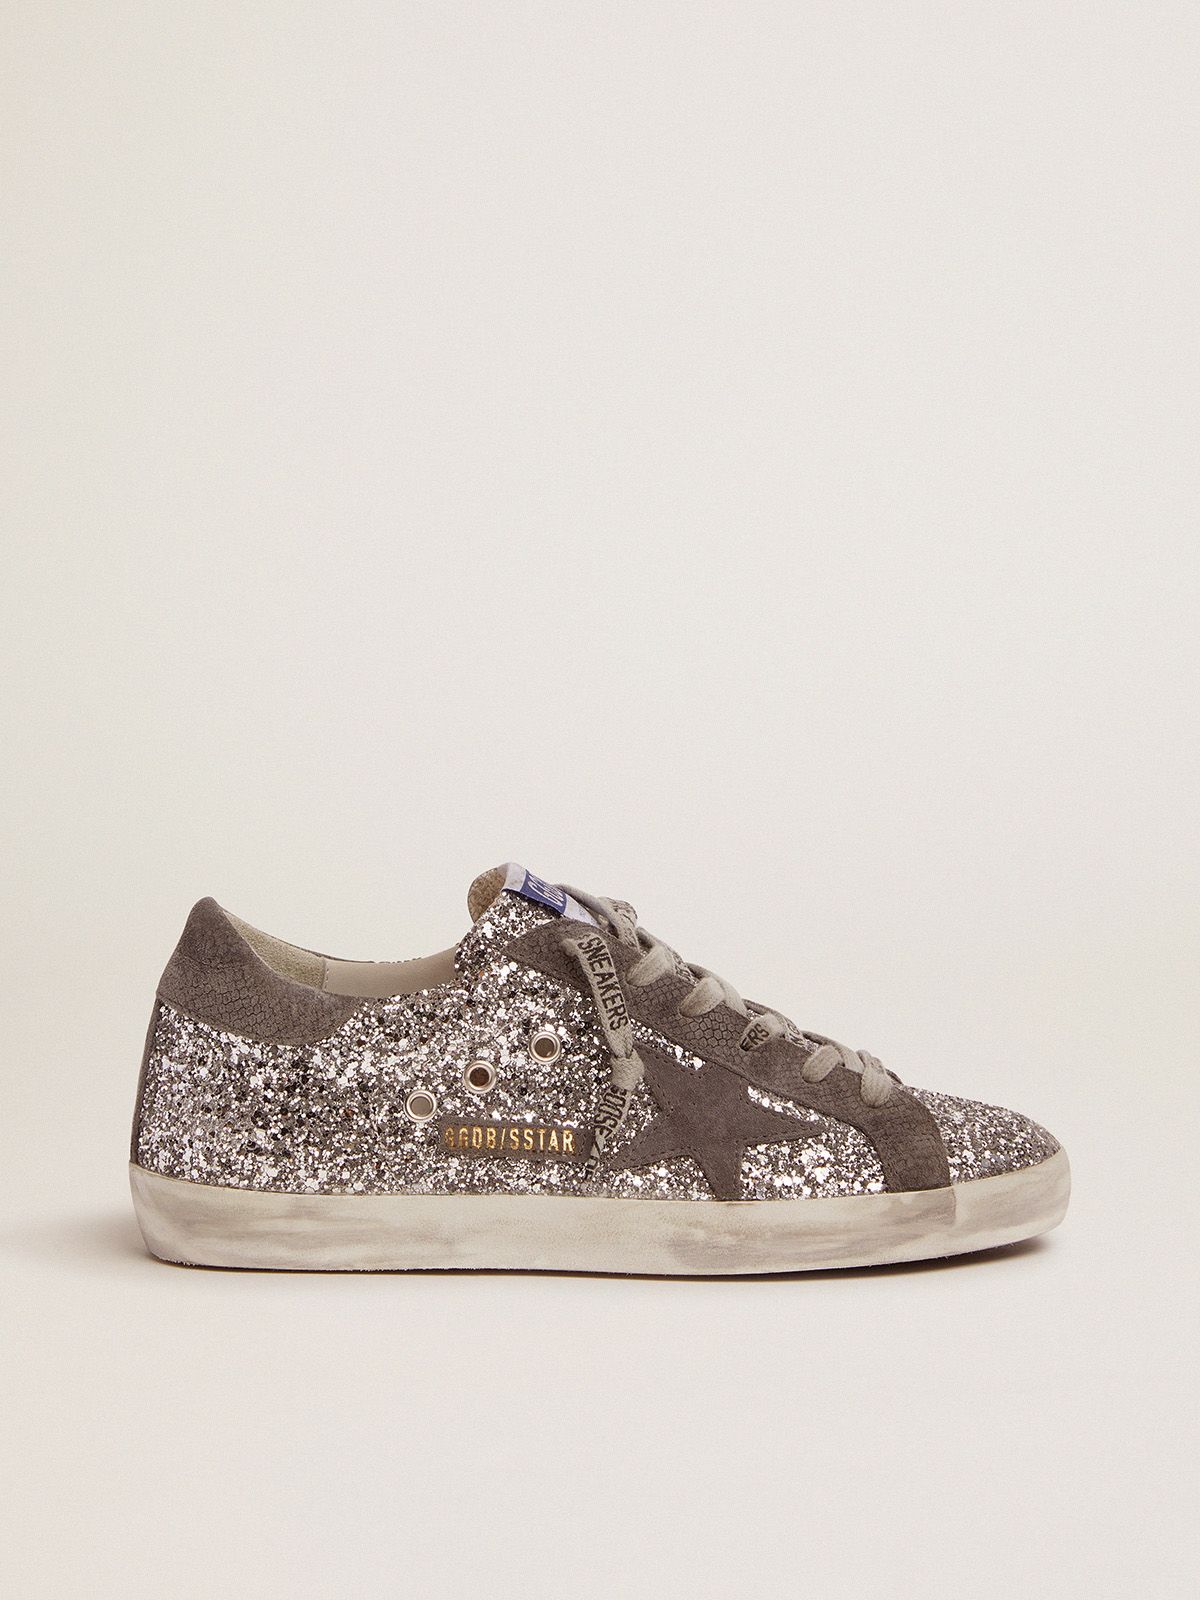 Super-Star sneakers in silver glitter and dark gray suede